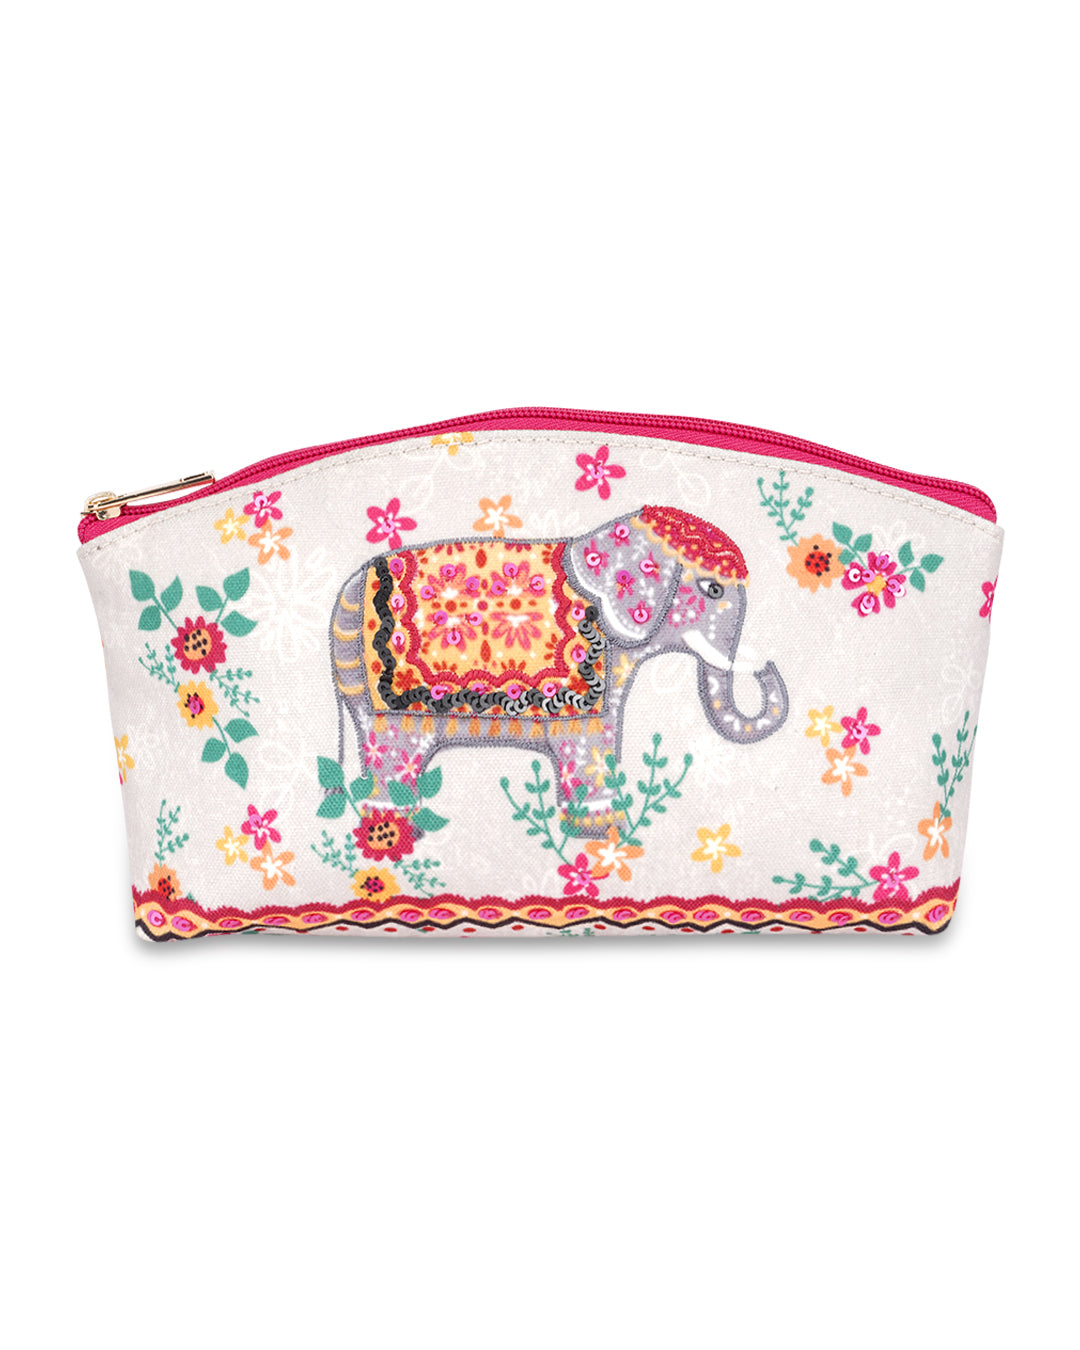 Decorative Elephant Toiletry Bag